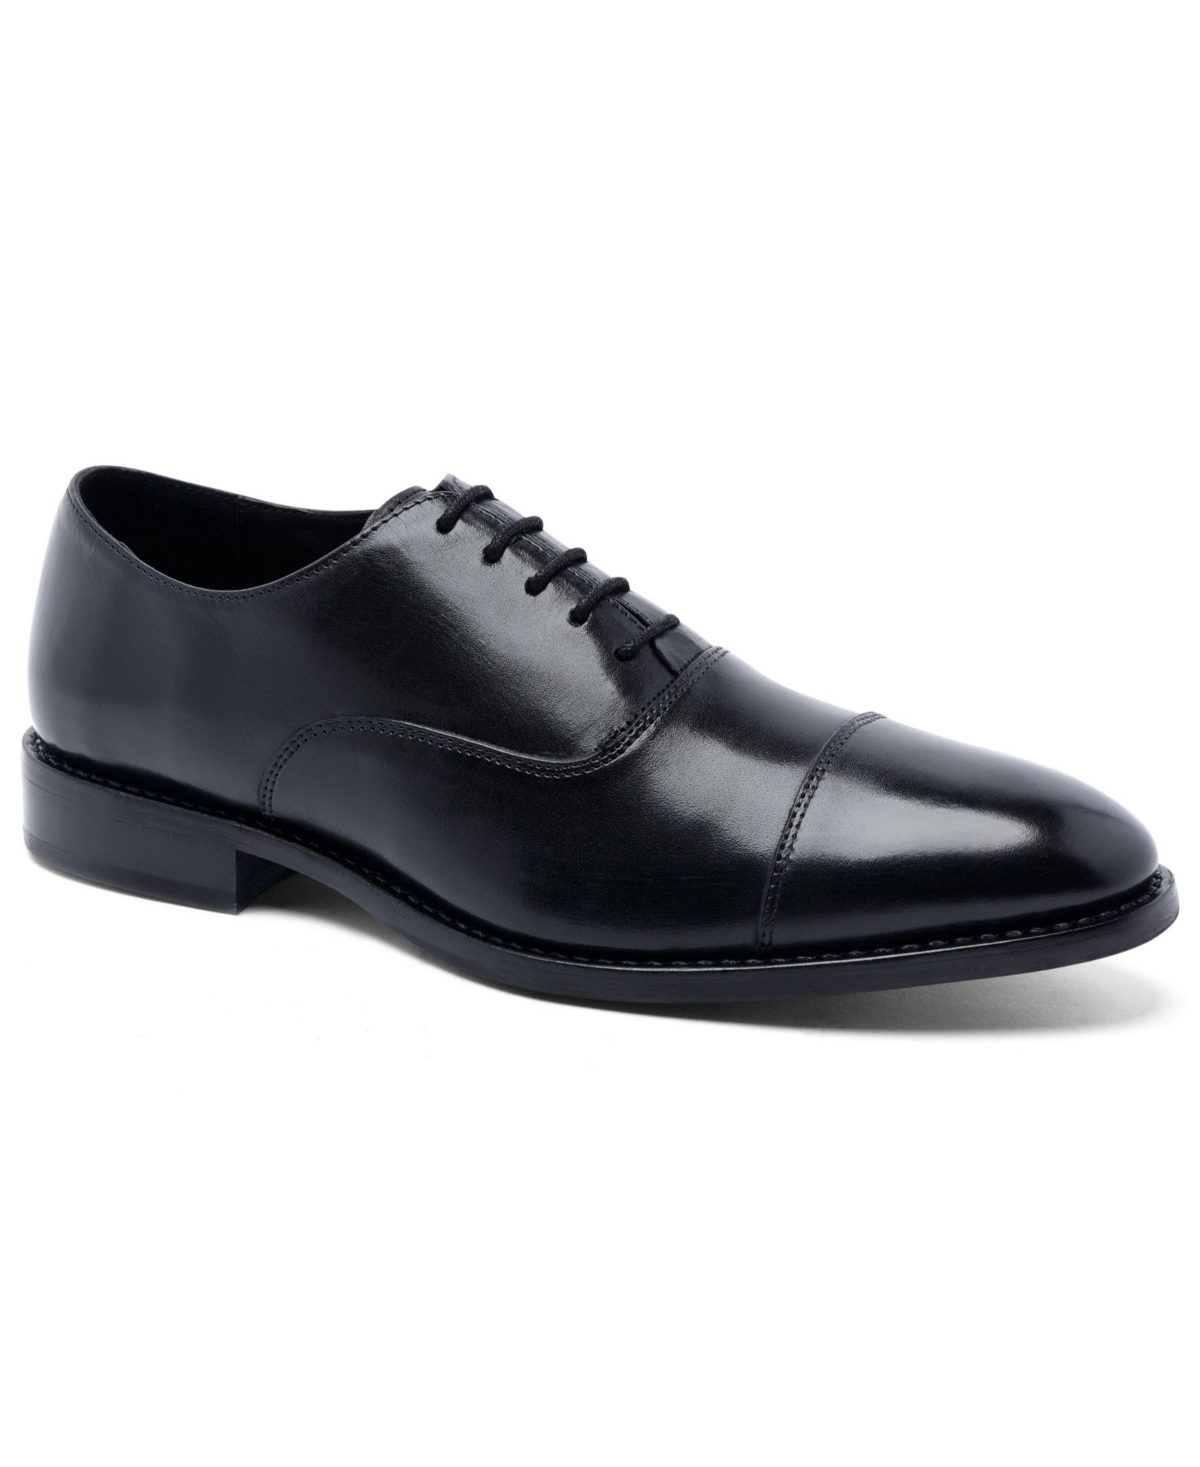 Men's Clinton Cap-Toe Oxford Goodyear Dress Shoes - Black